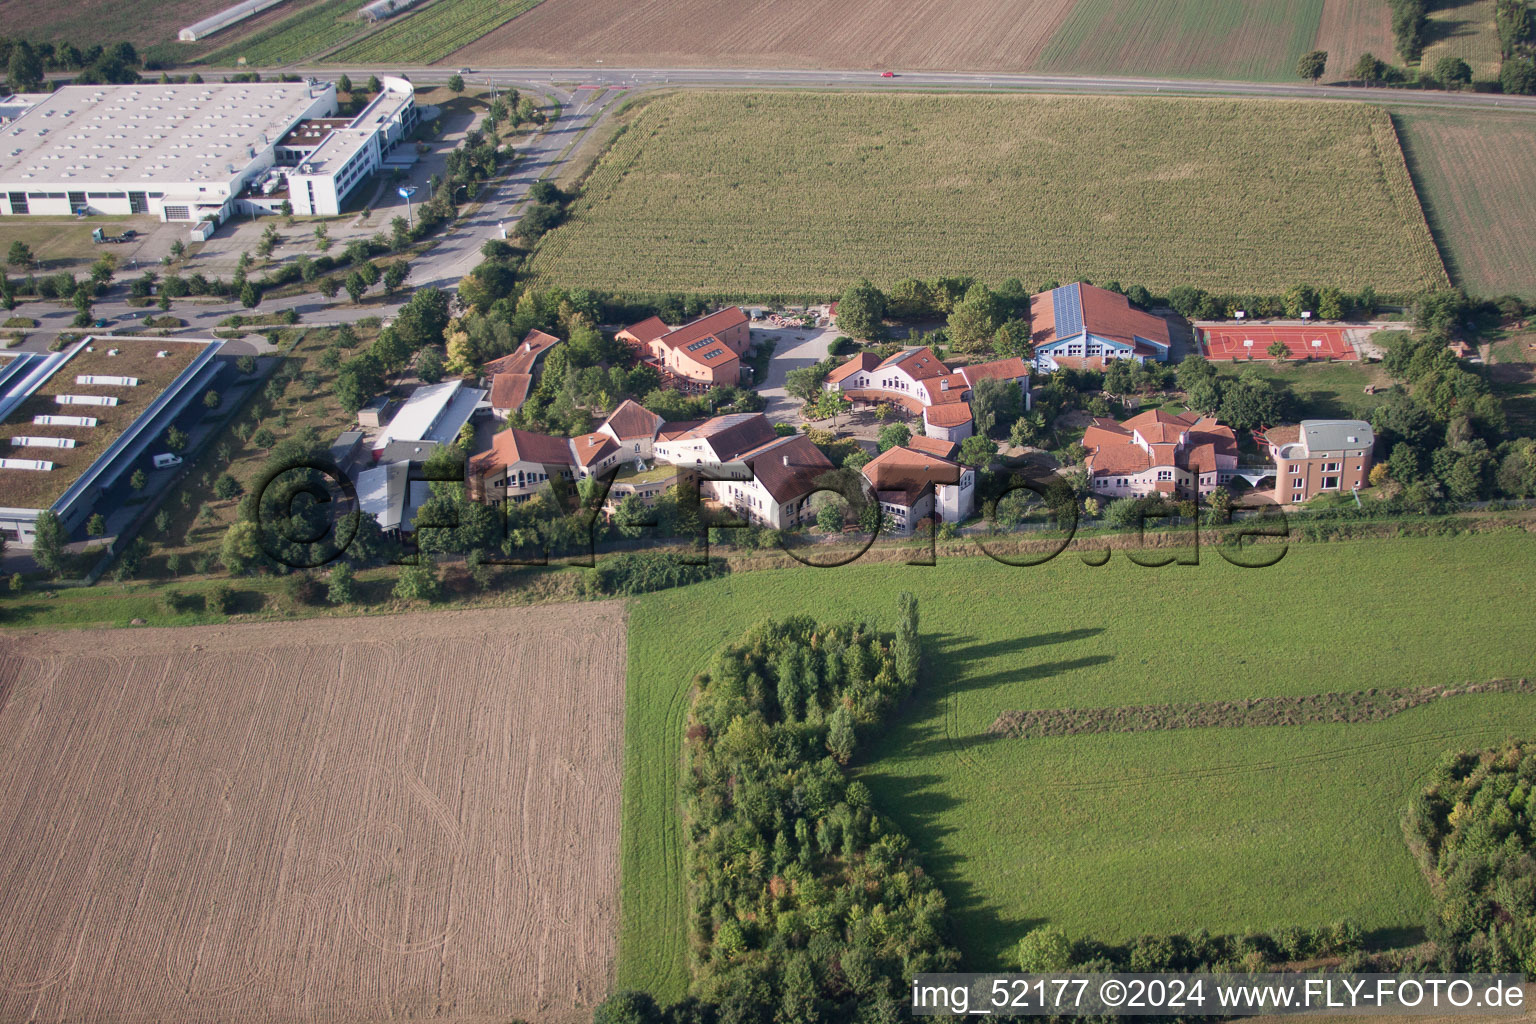 Free Waldorf School in Dossenheim in the state Baden-Wuerttemberg, Germany